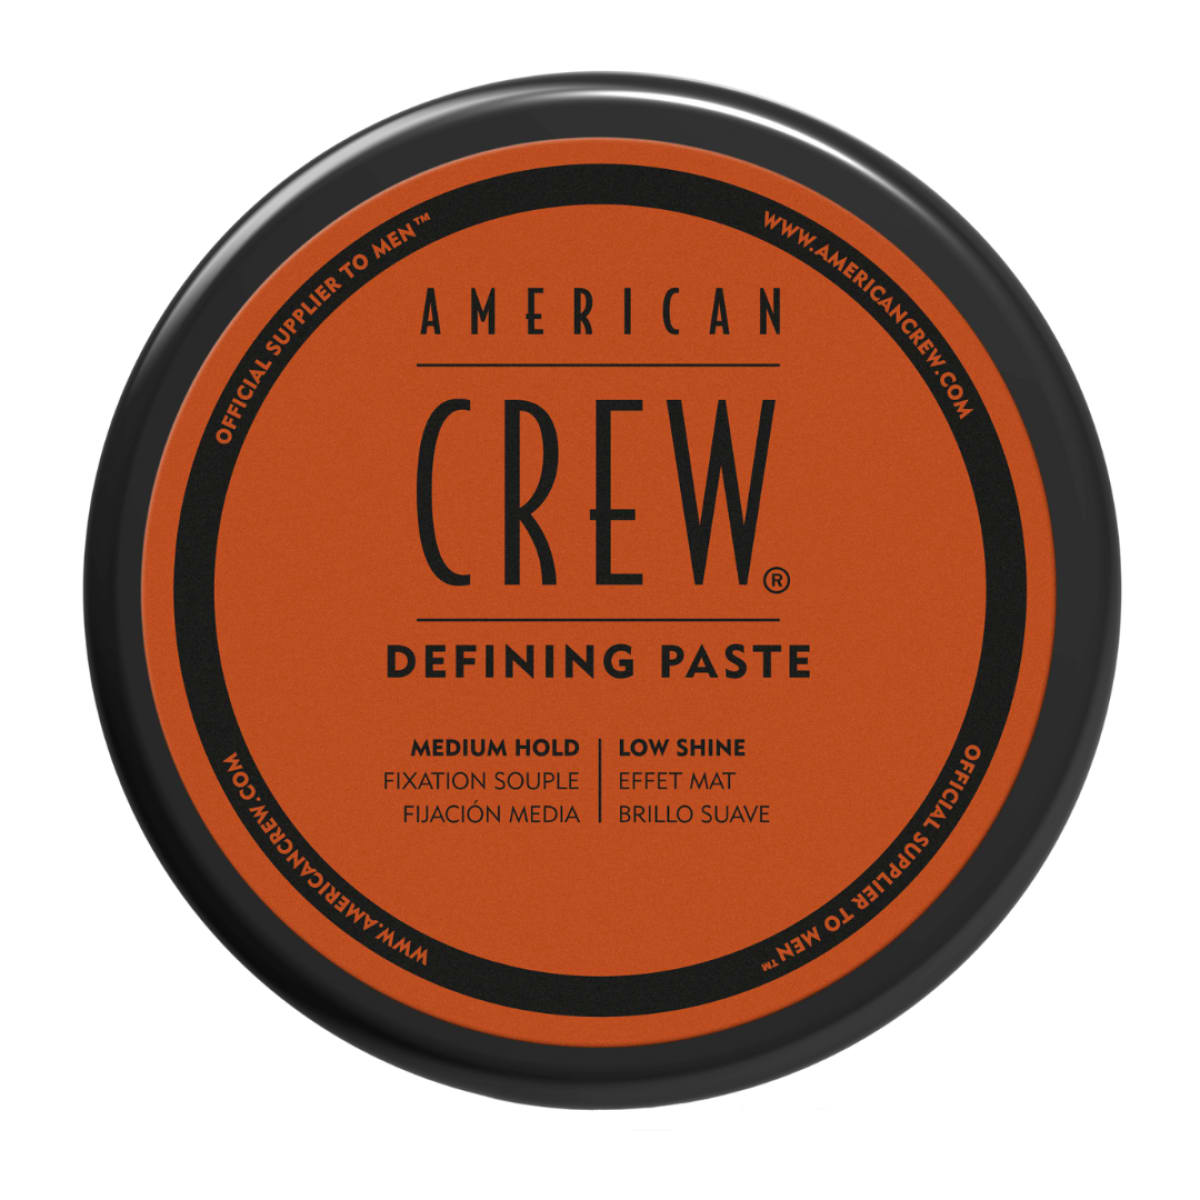 American Crew Defining Paste